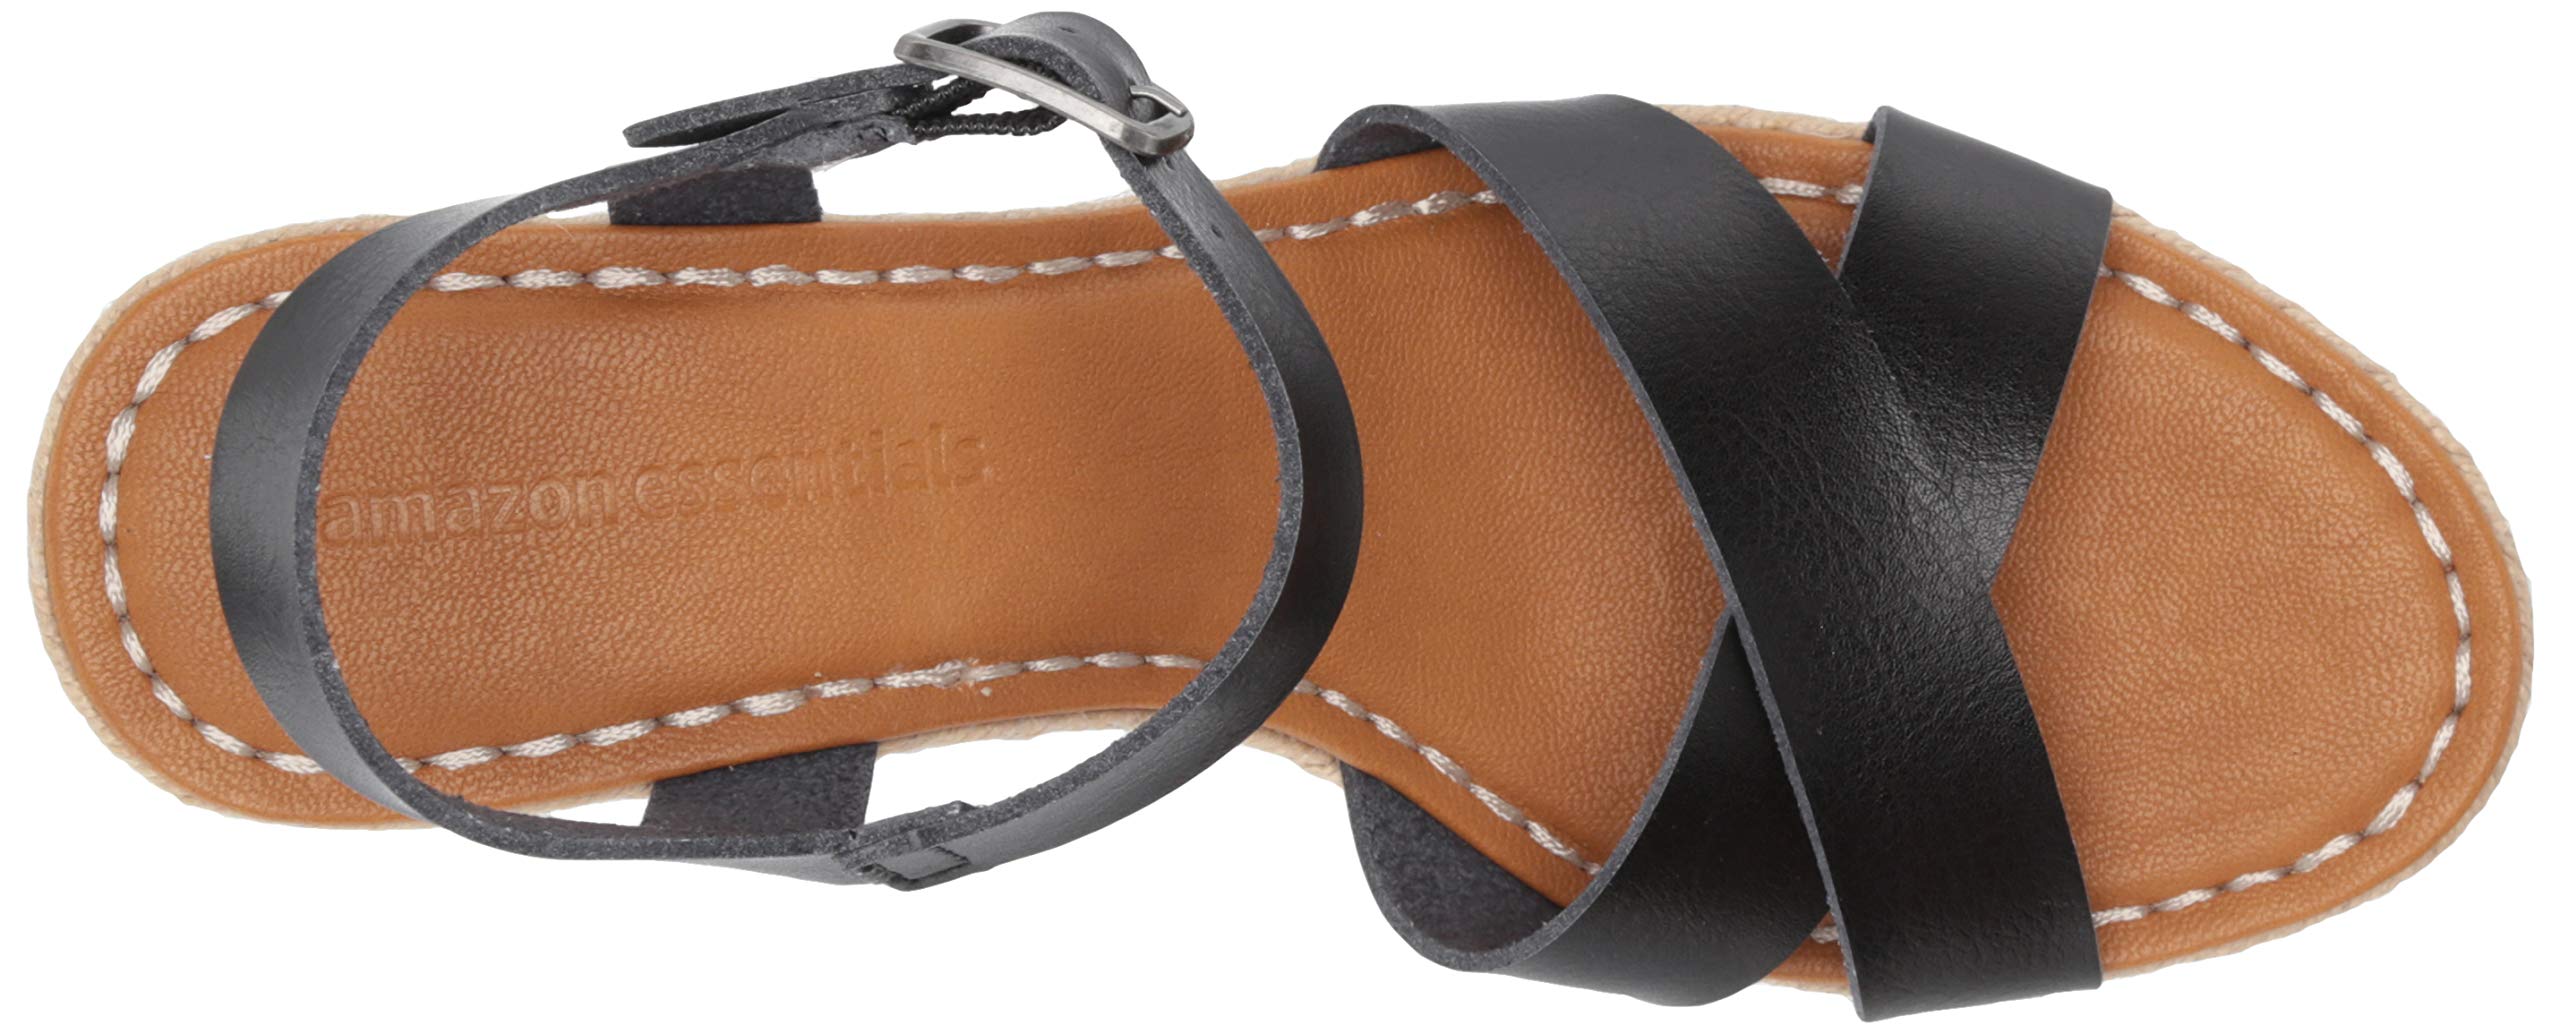 Amazon Essentials Women's Espadrille Wedge Sandal